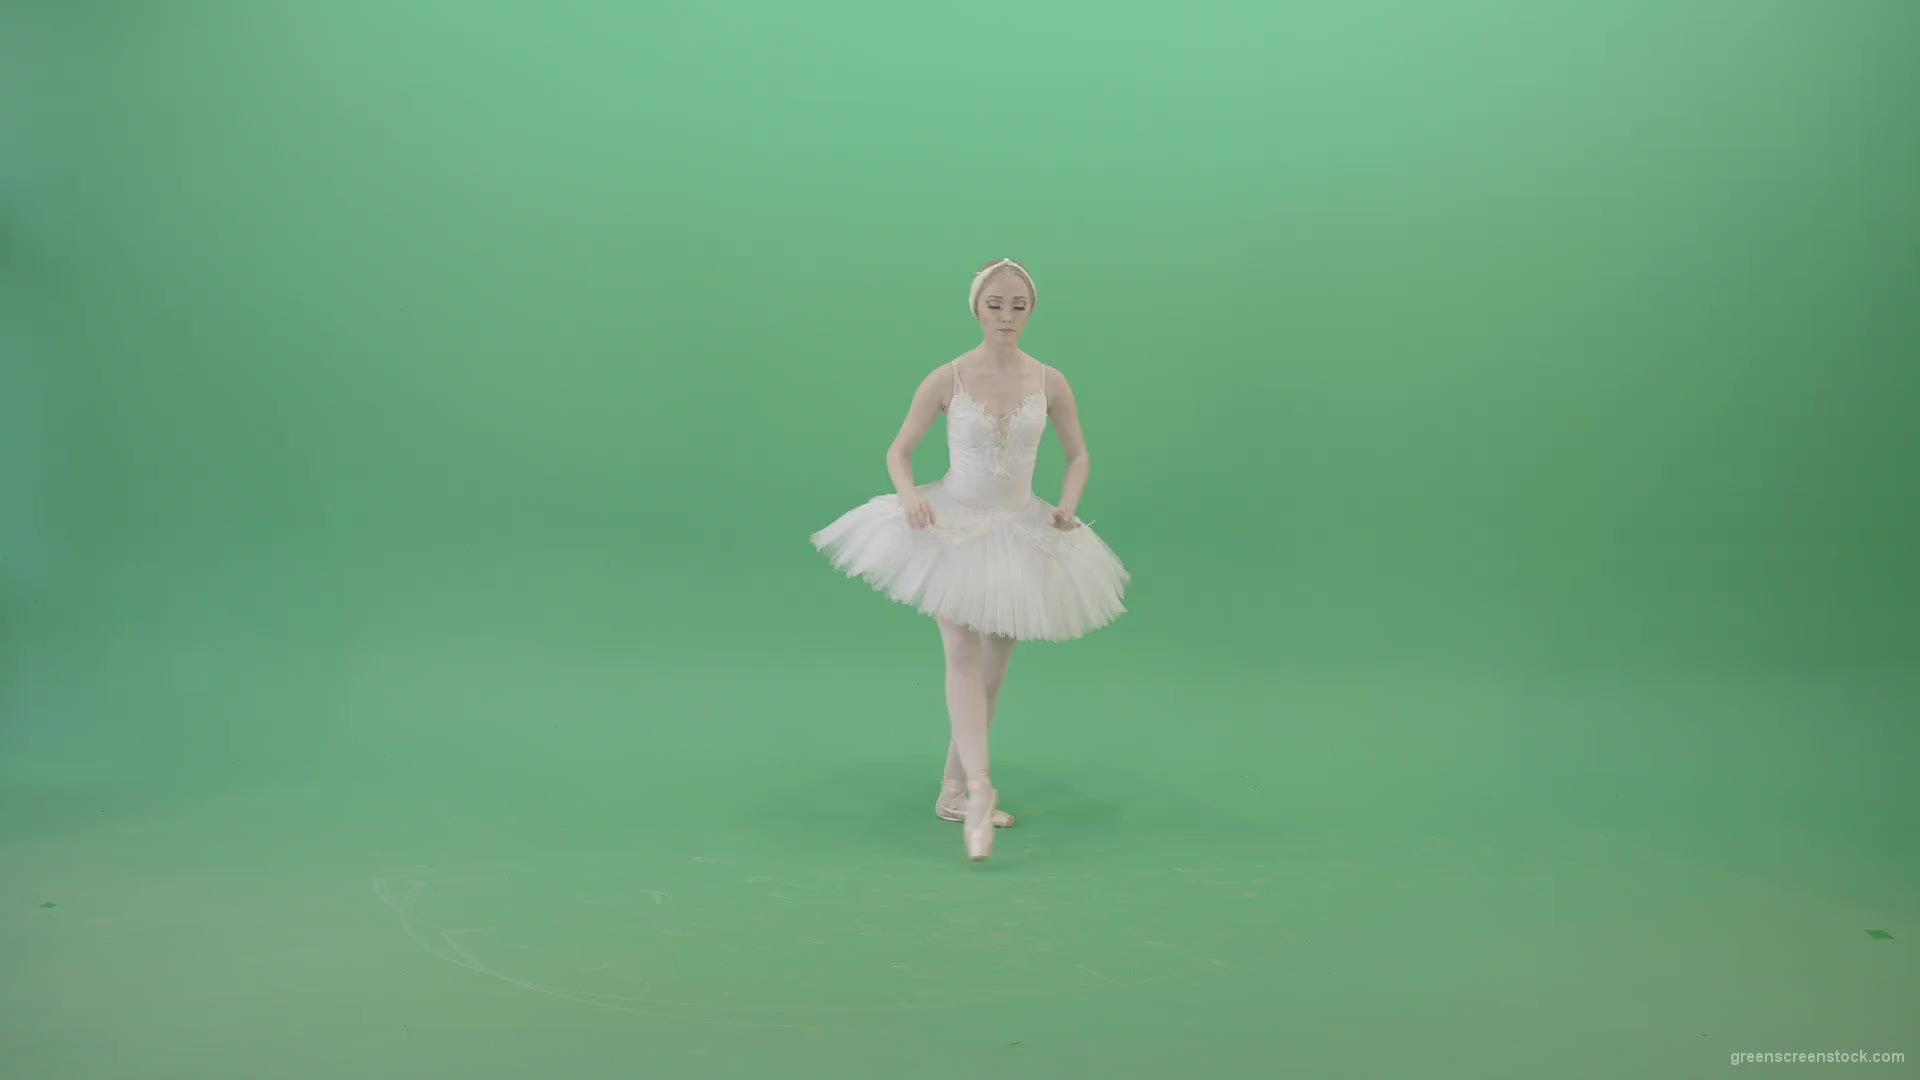 Prima-ballerina-ballet-girl-elegant-dancing-and-spinning-on-green-screen-4K-Video-Footage-1920_001 Green Screen Stock